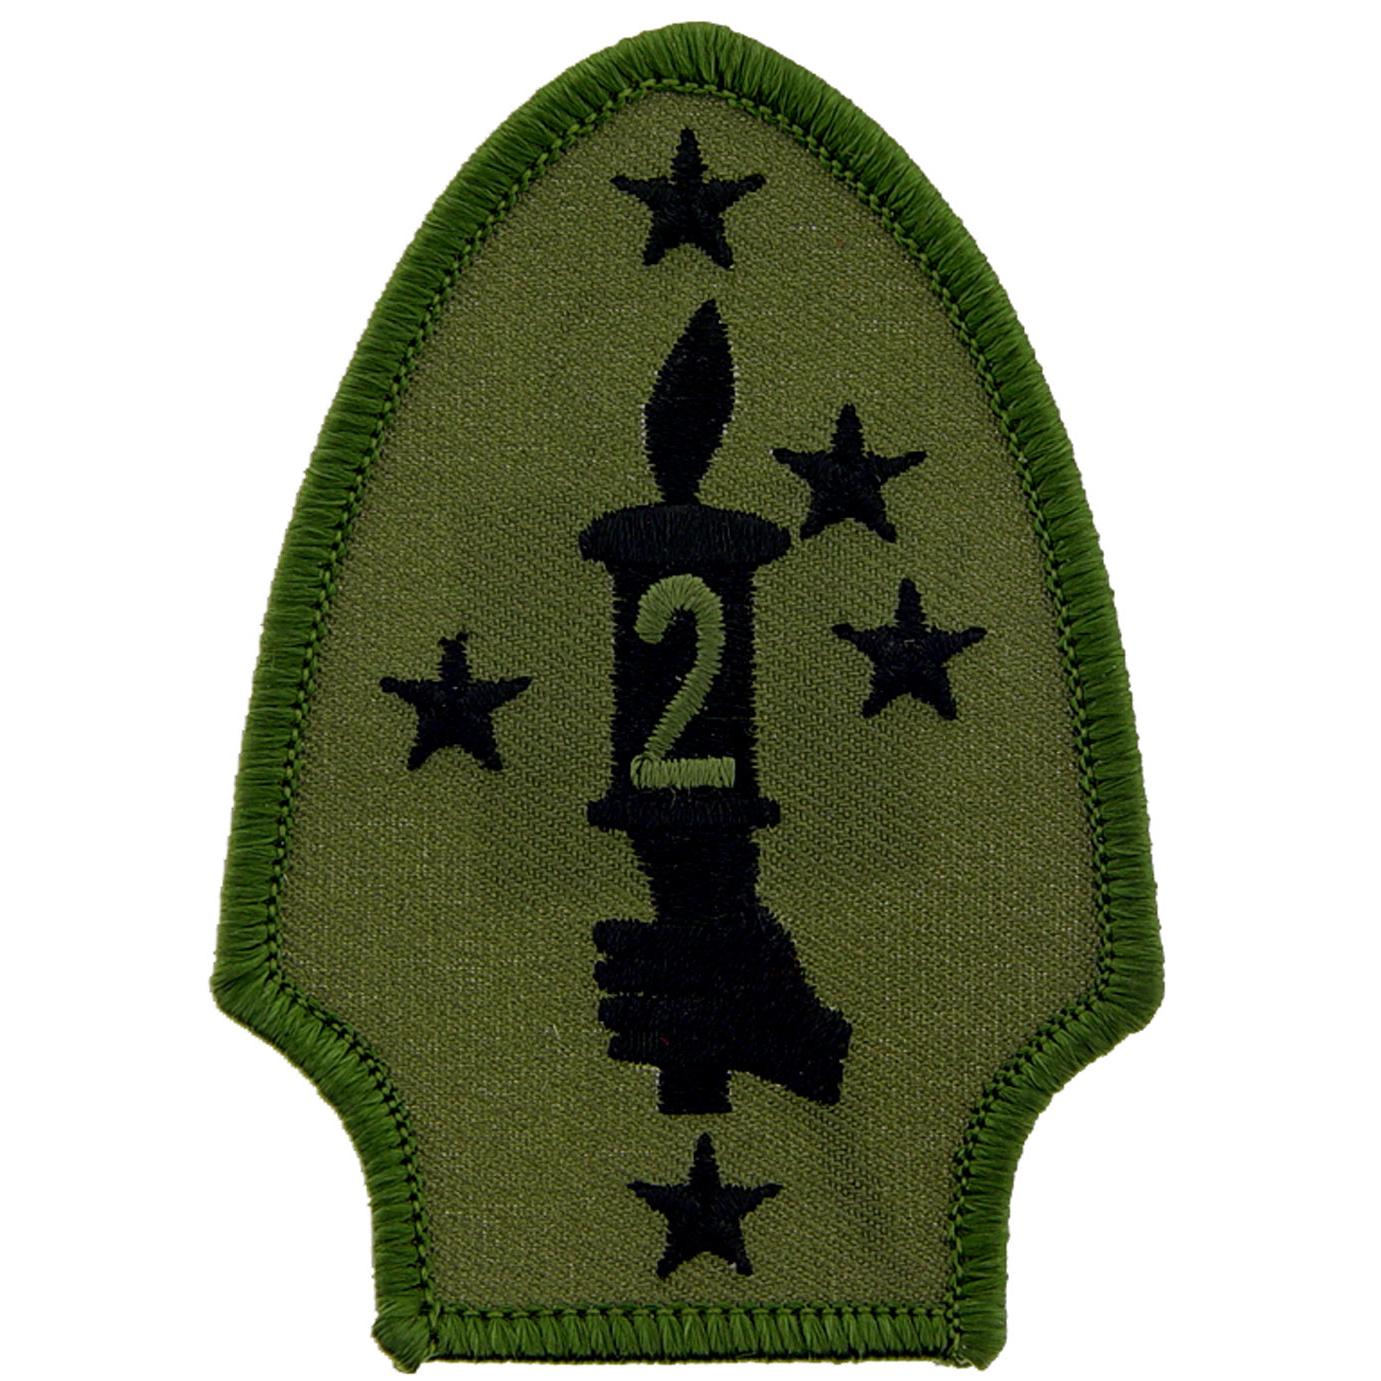 green division symbol